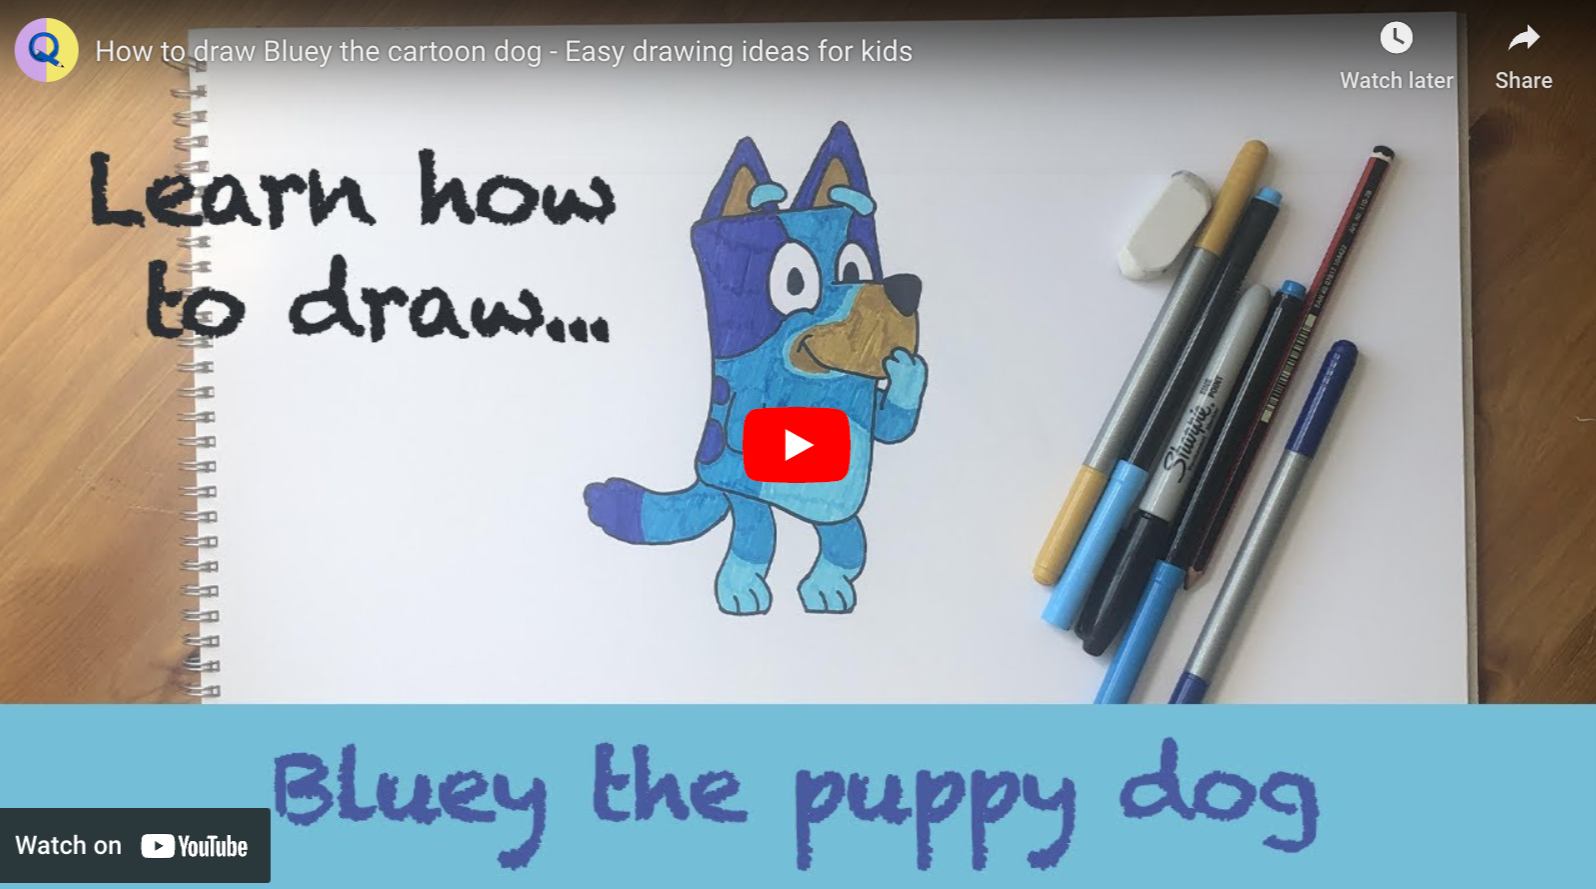 How To Draw Bluey the Cartoon Dog Easily